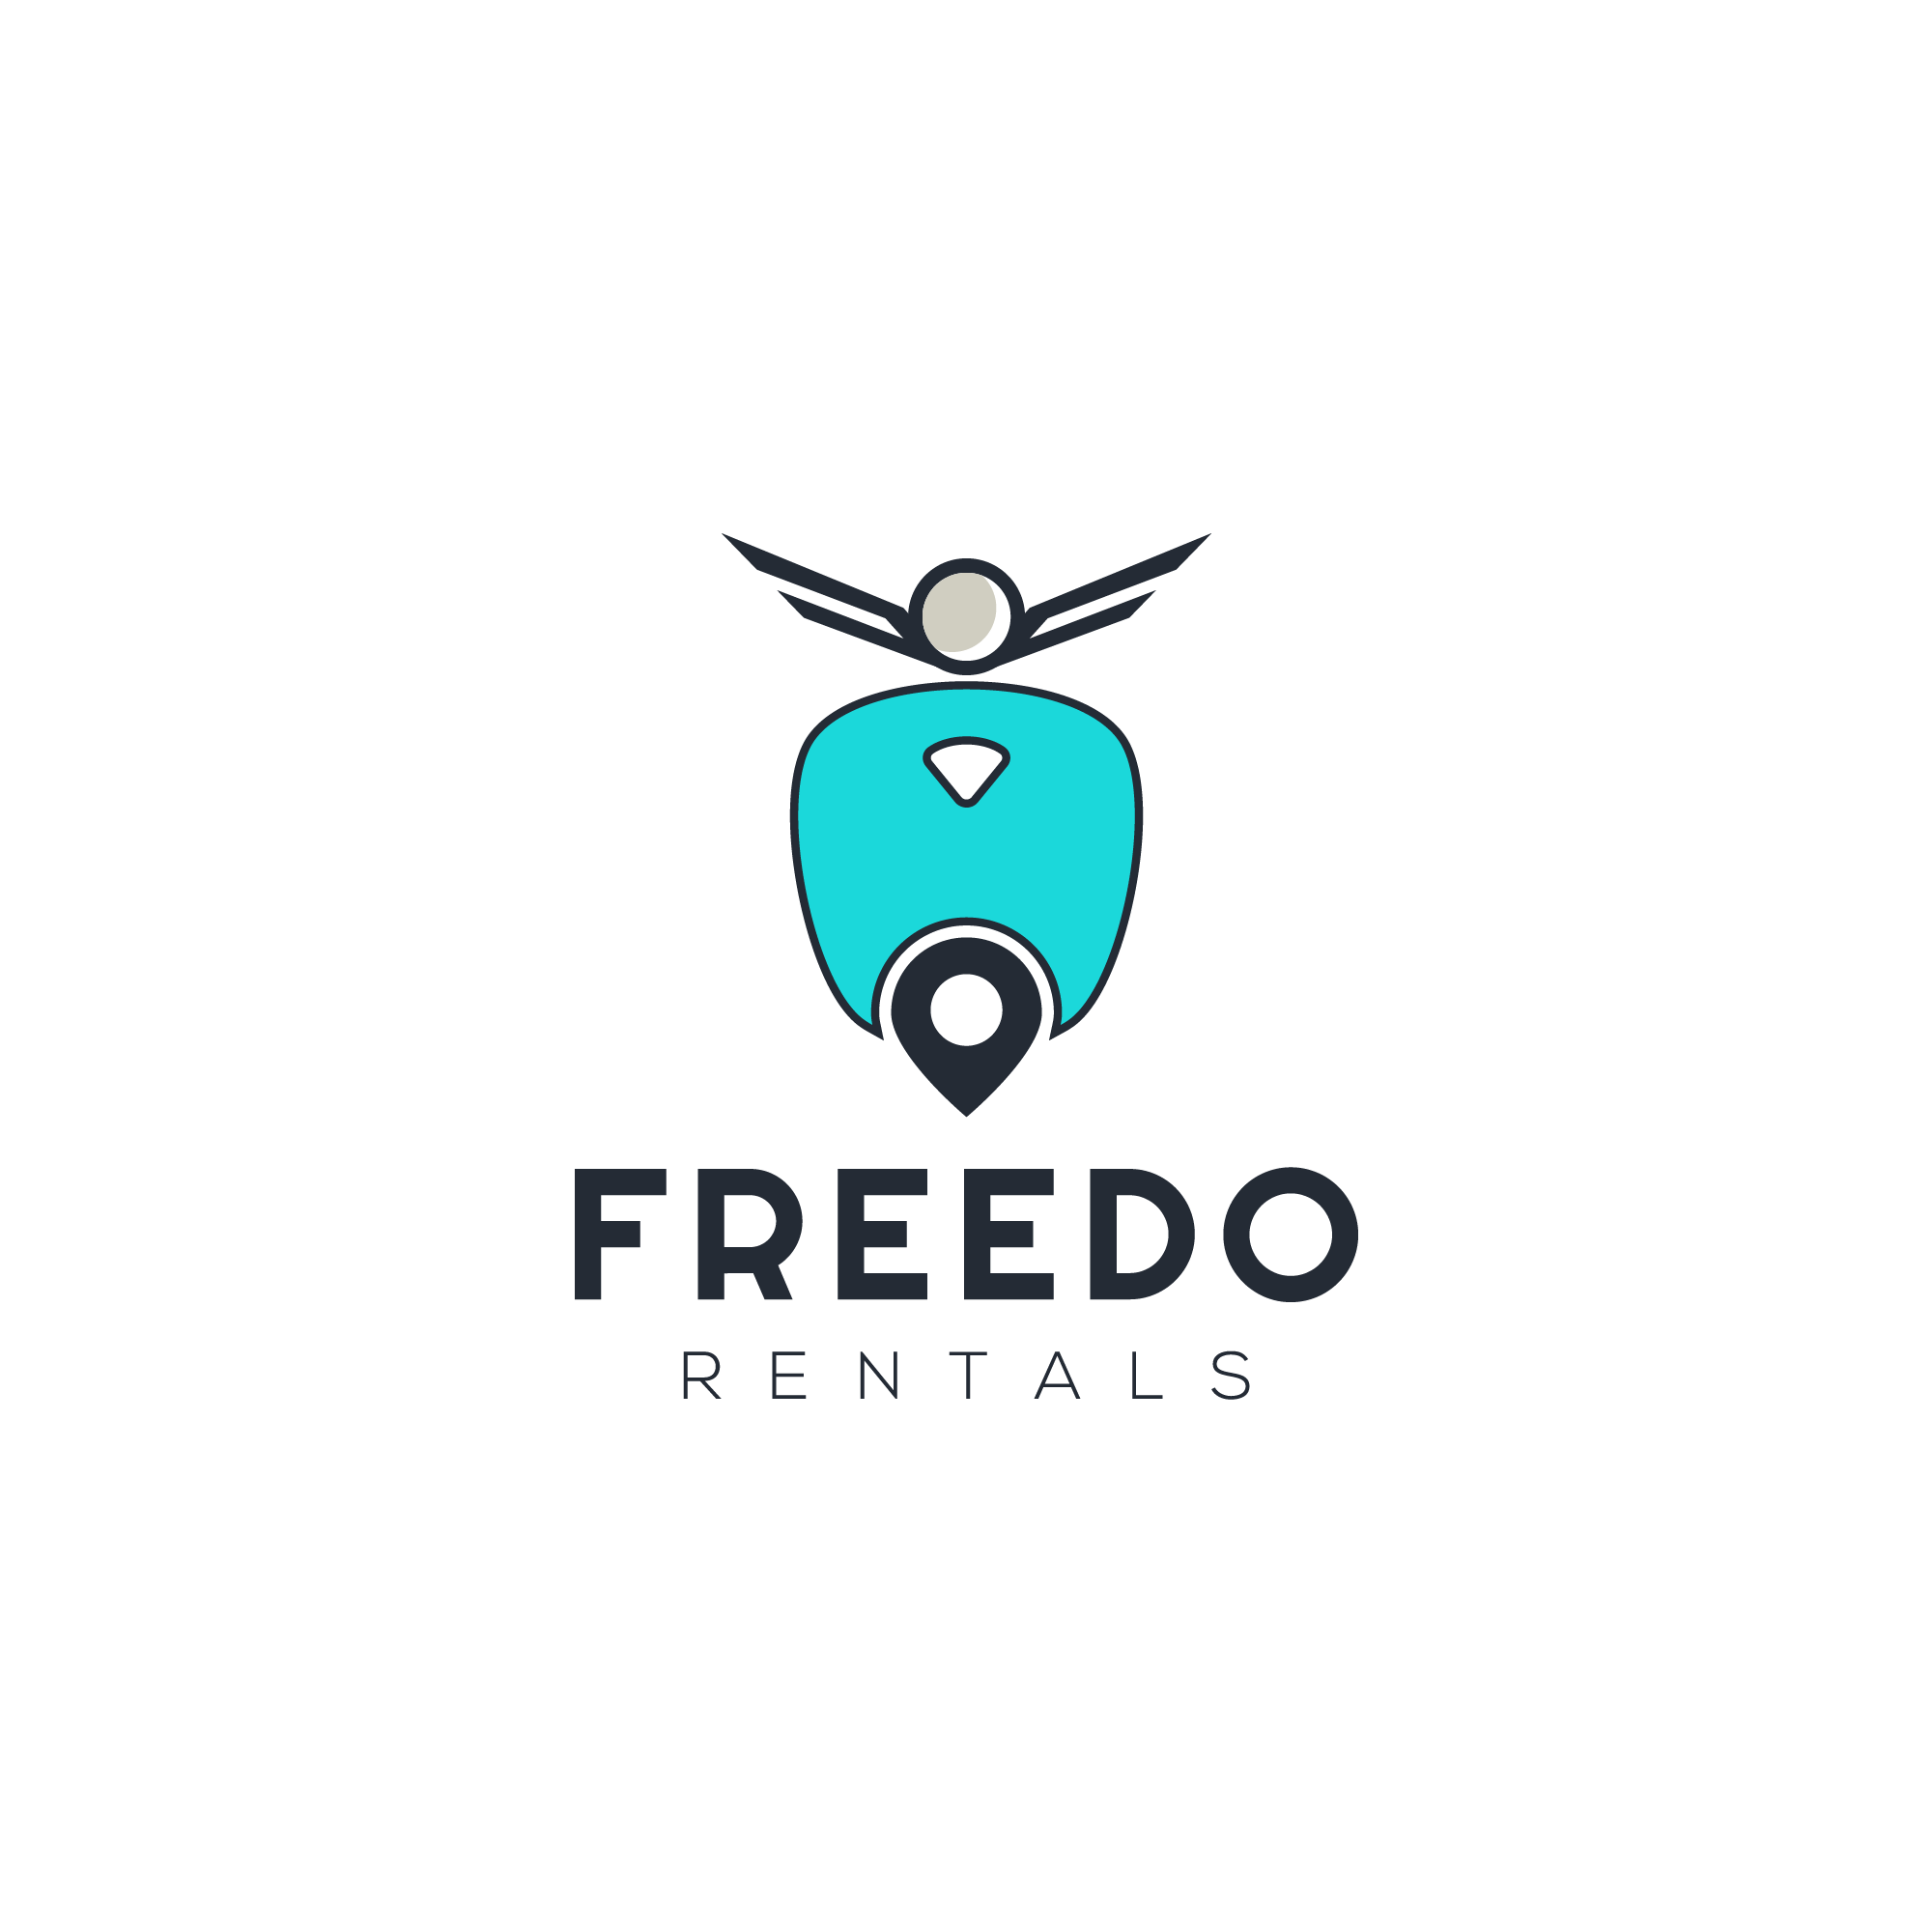 freedo rentals: bike rentals in noida, delhi ncr |